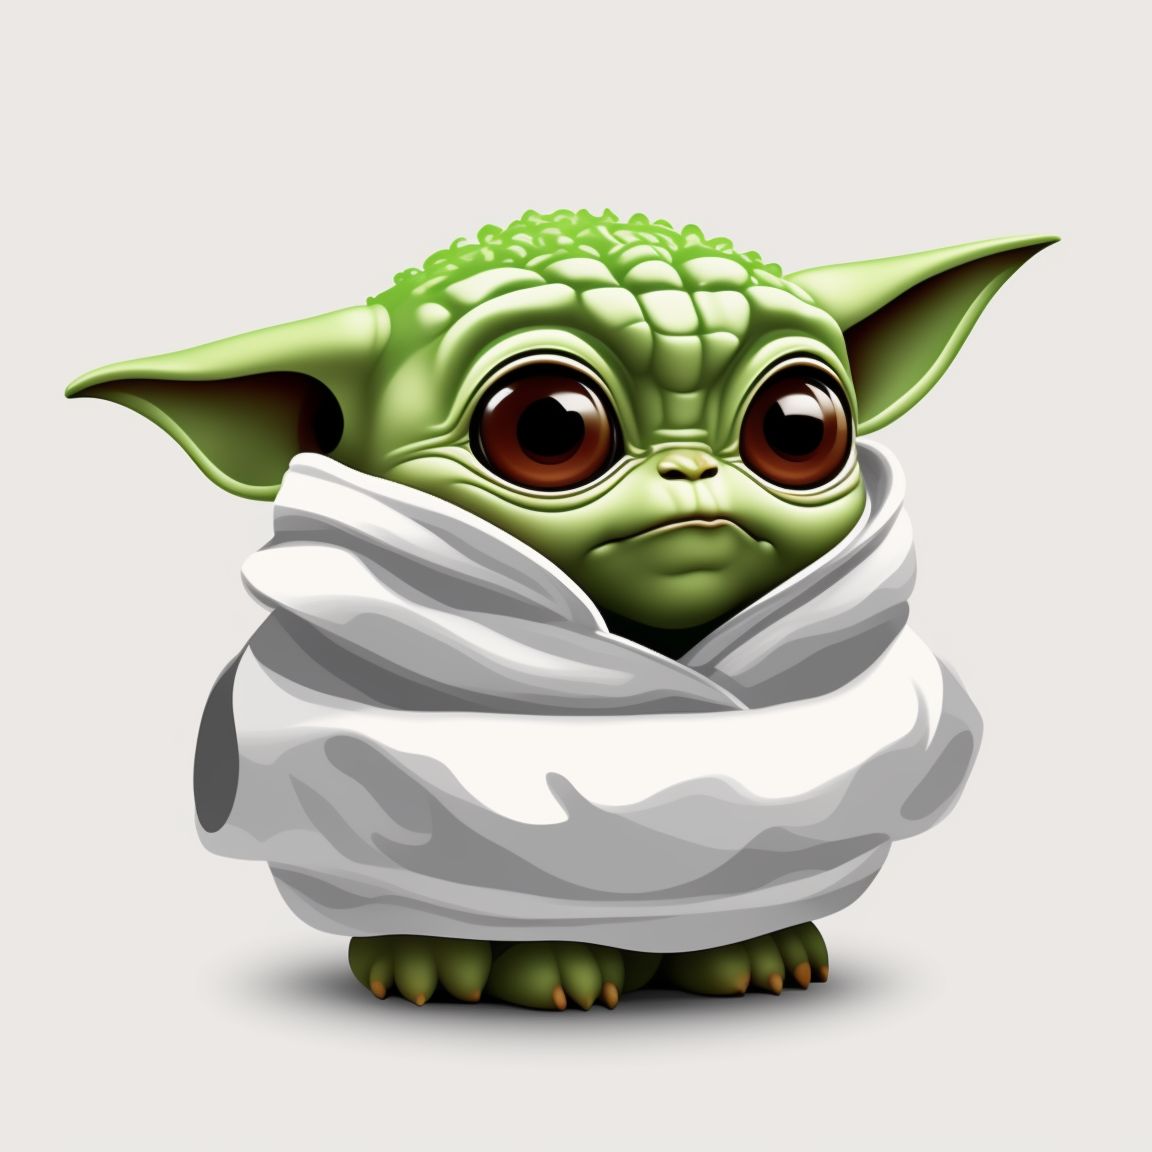 wiry-louse284: Baby Yoda